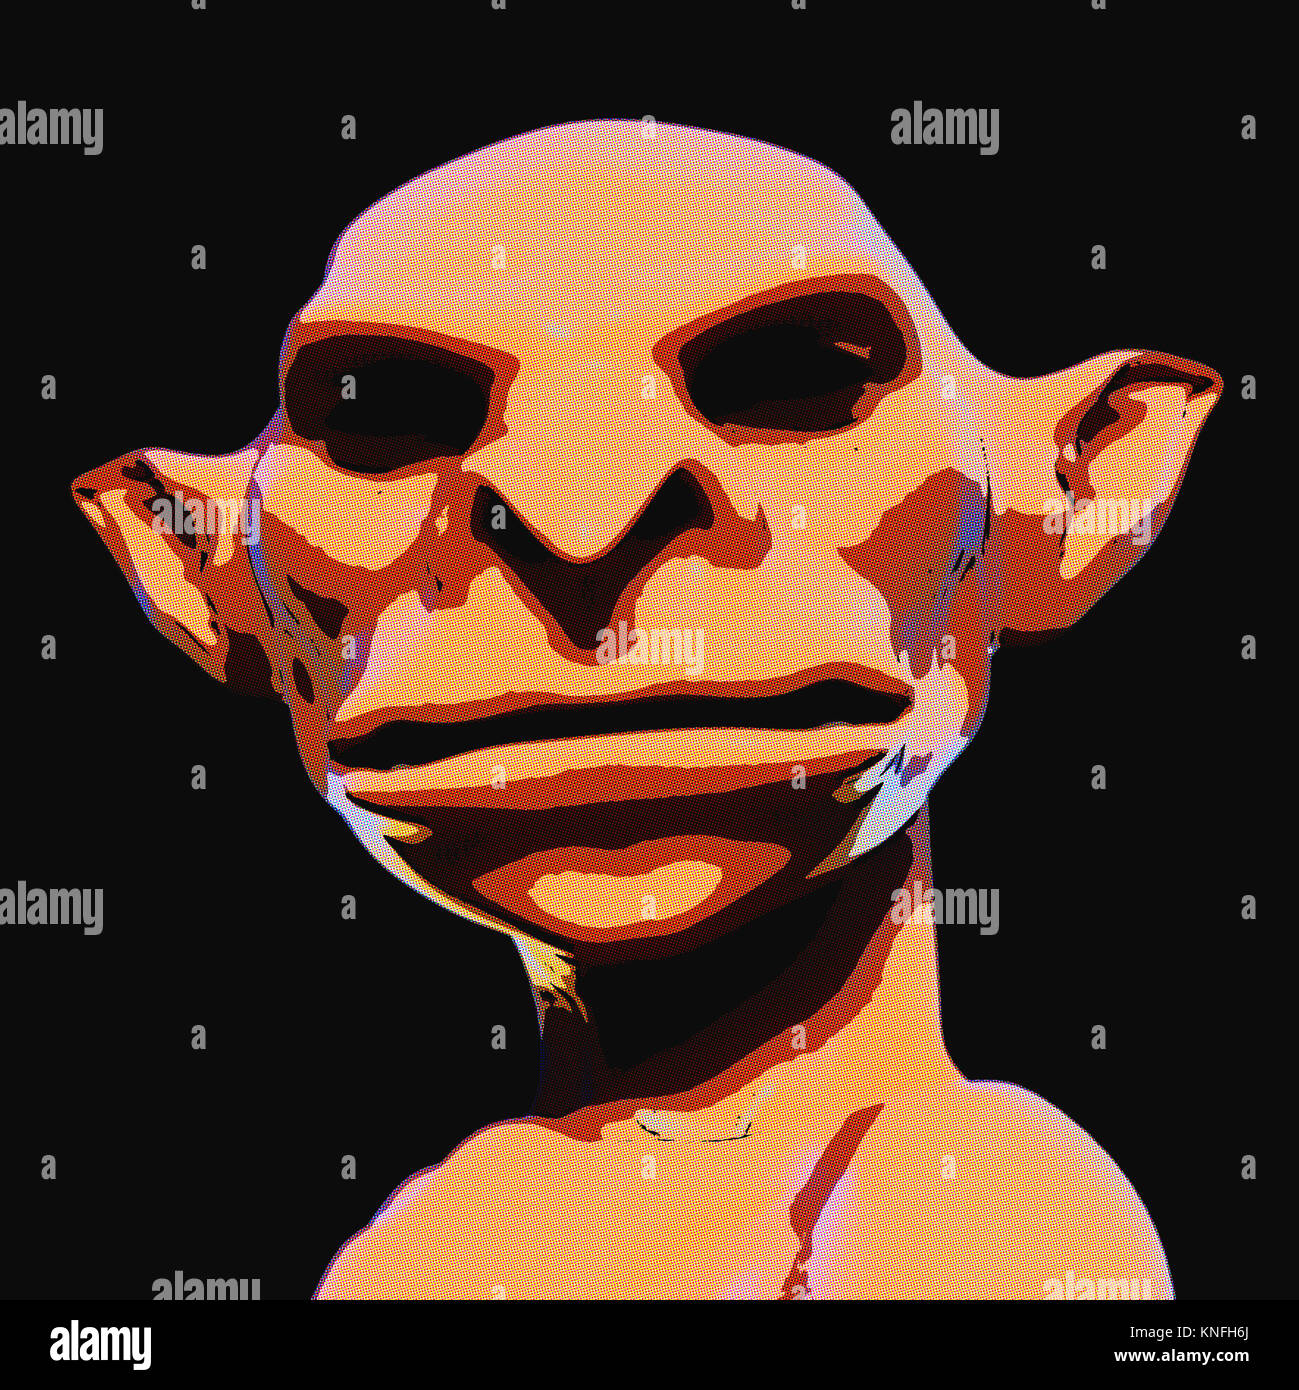 Digital 3D Illustration of a creepy Creature Stock Photo